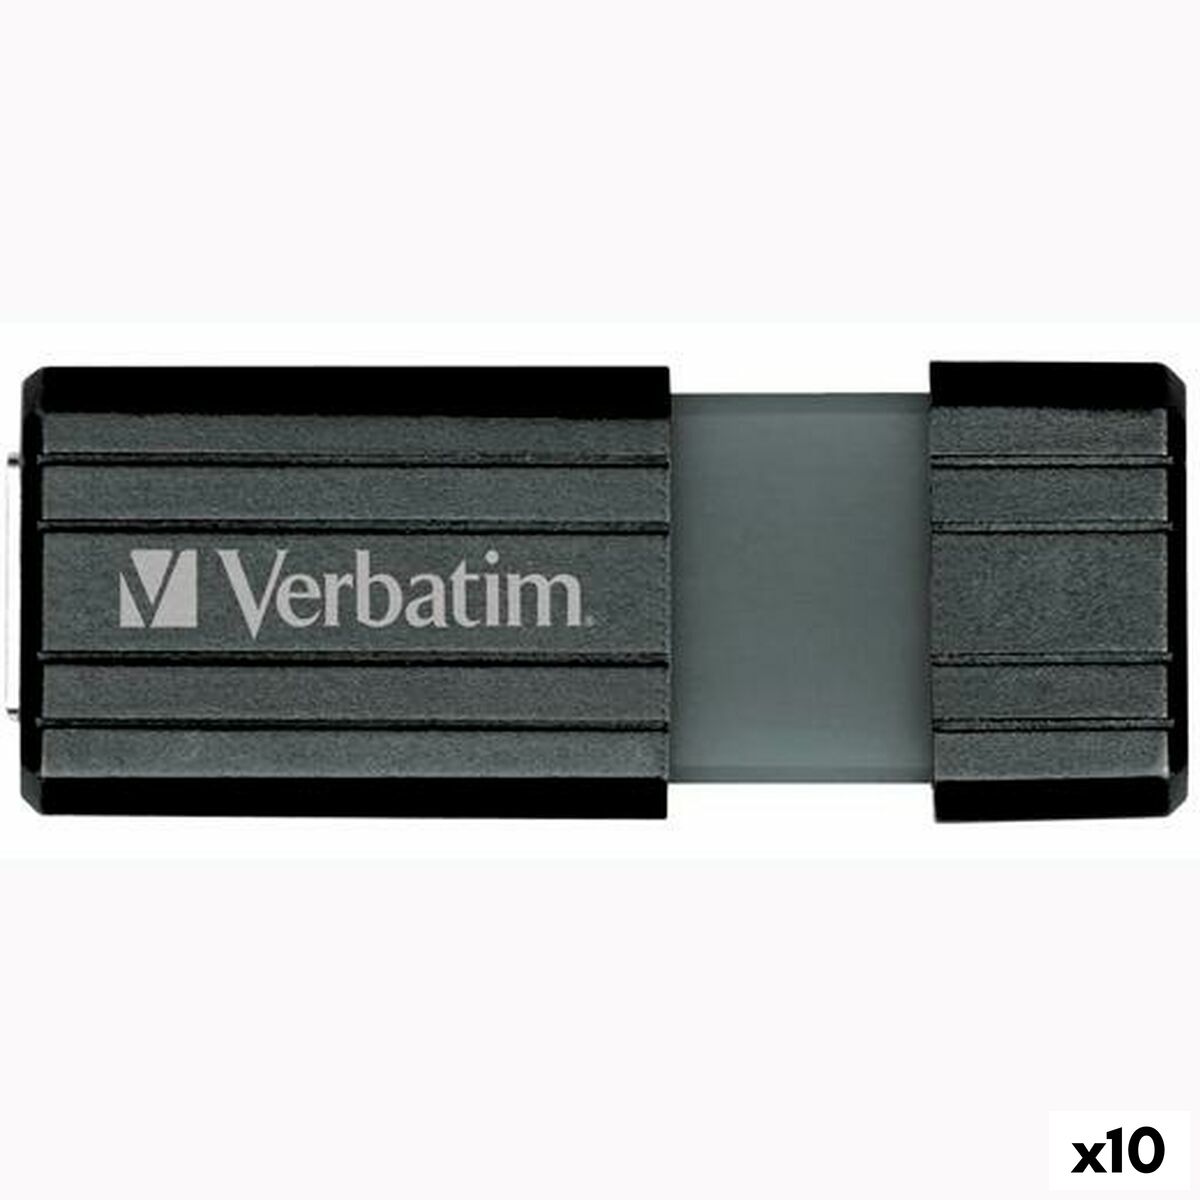 Clé USB Verbatim Store'n'Go PinStripe Noir 16 GB